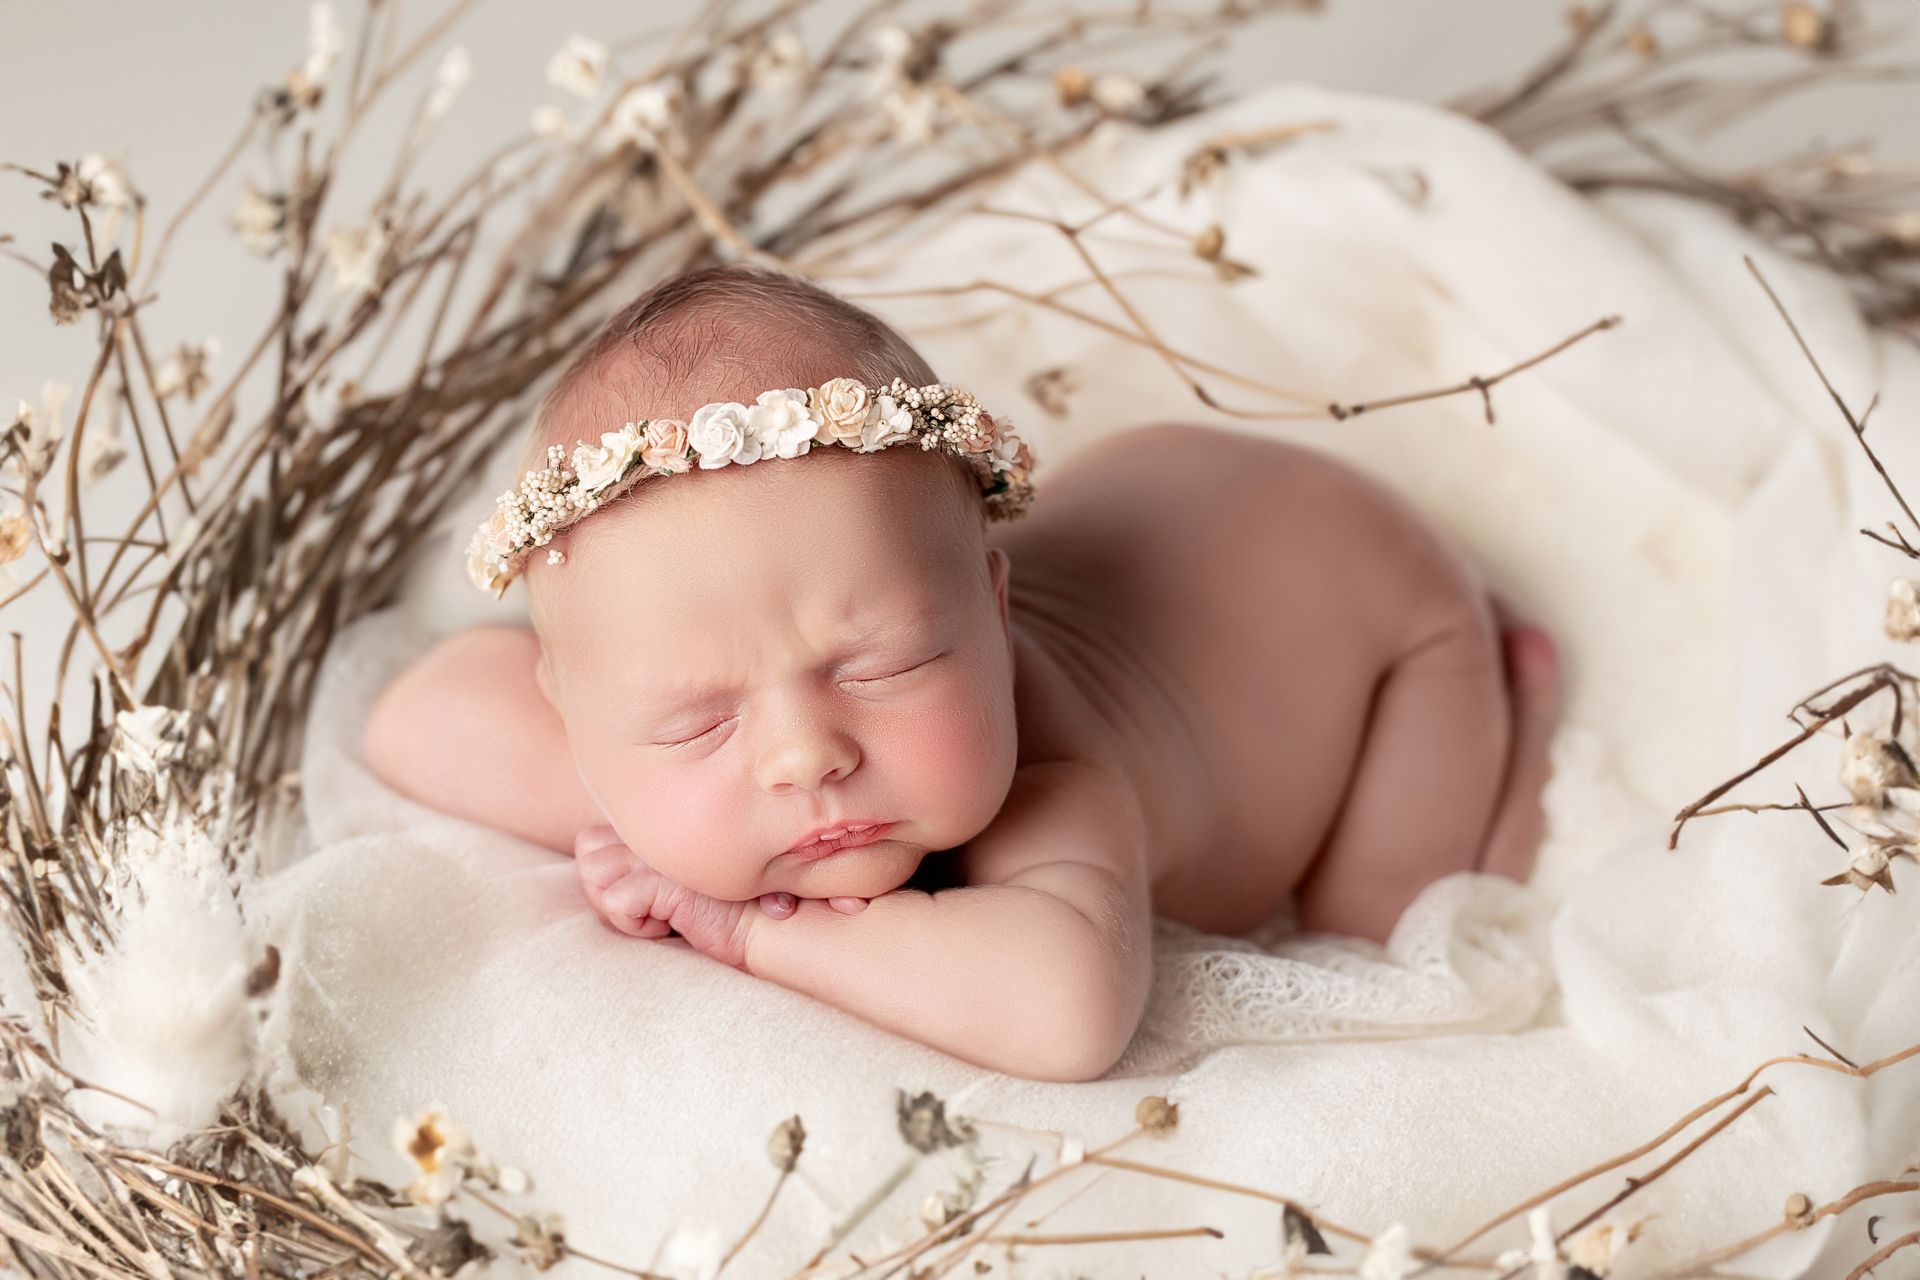 newborn baby photography studio lowestoft suffolk oulton broad norwich loddon beccles